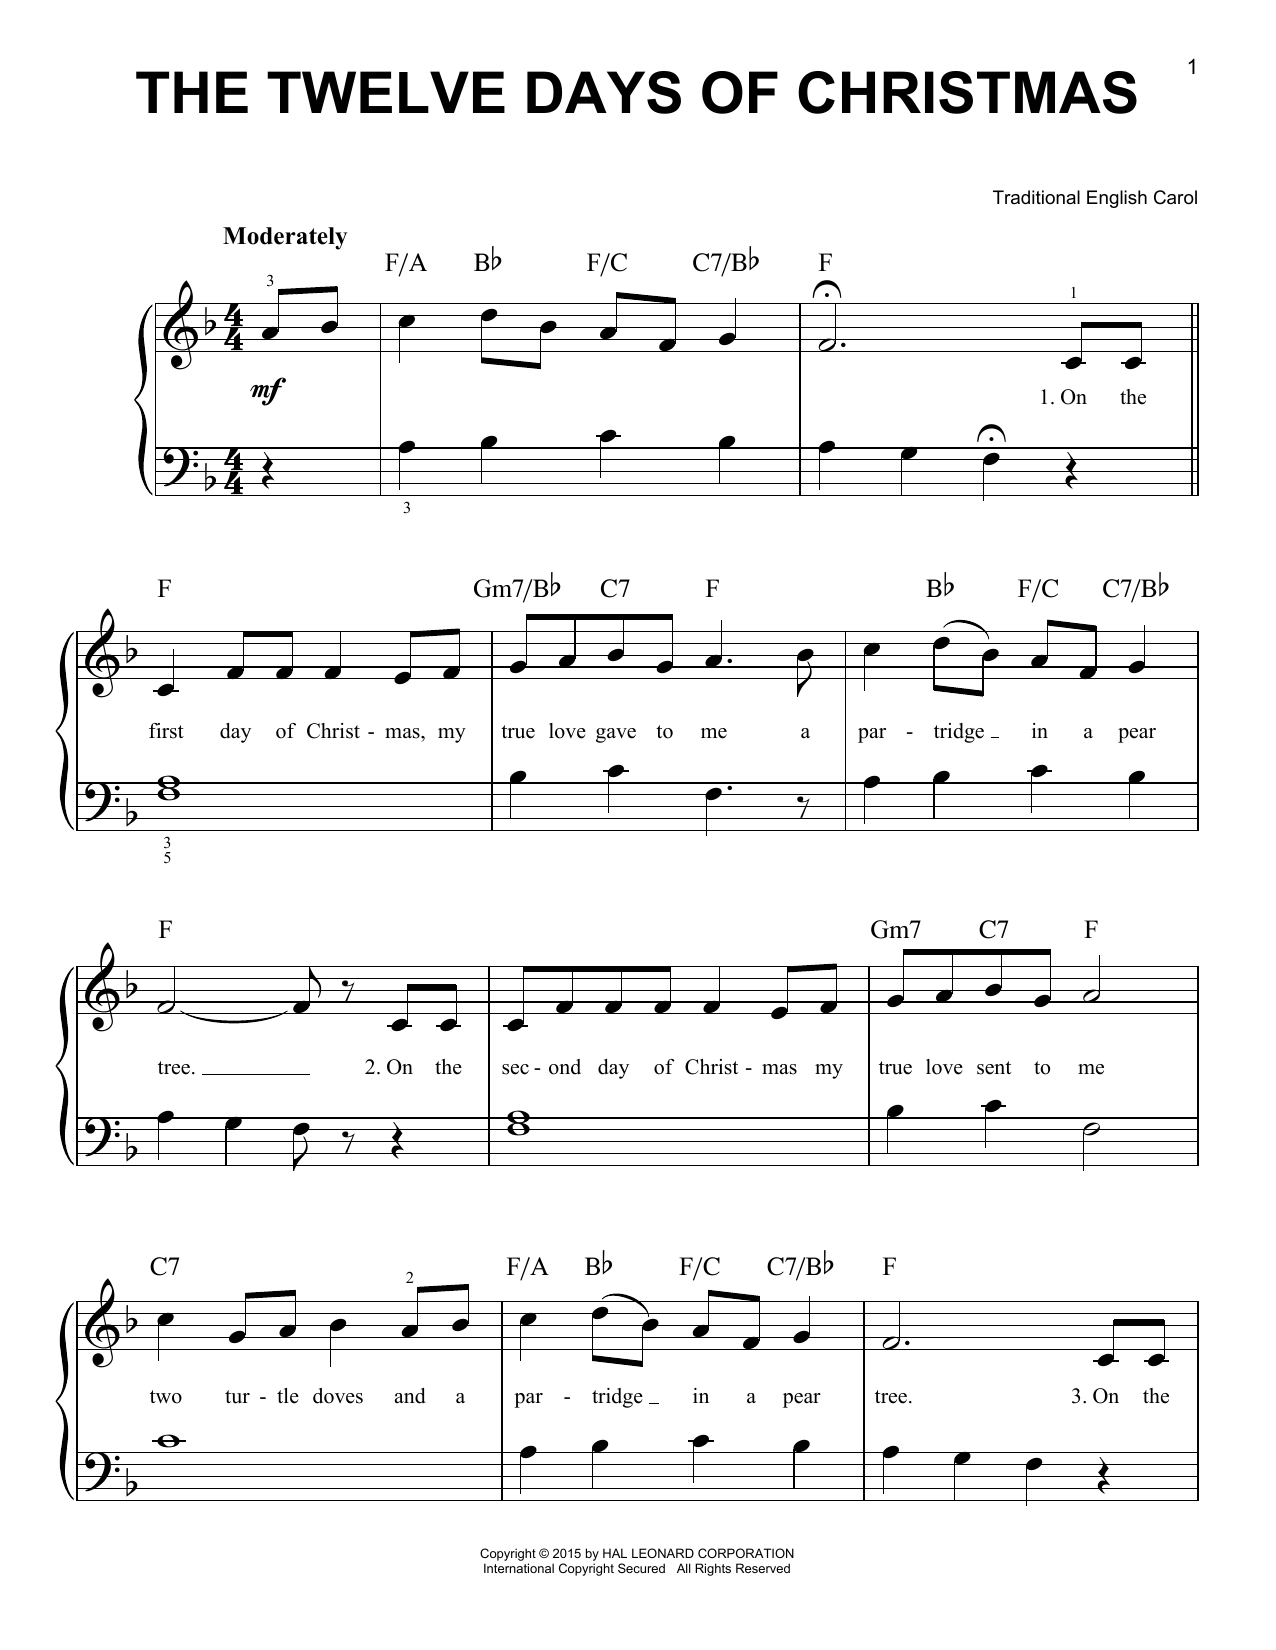 Download Traditional English Carol The Twelve Days Of Christmas Sheet Music